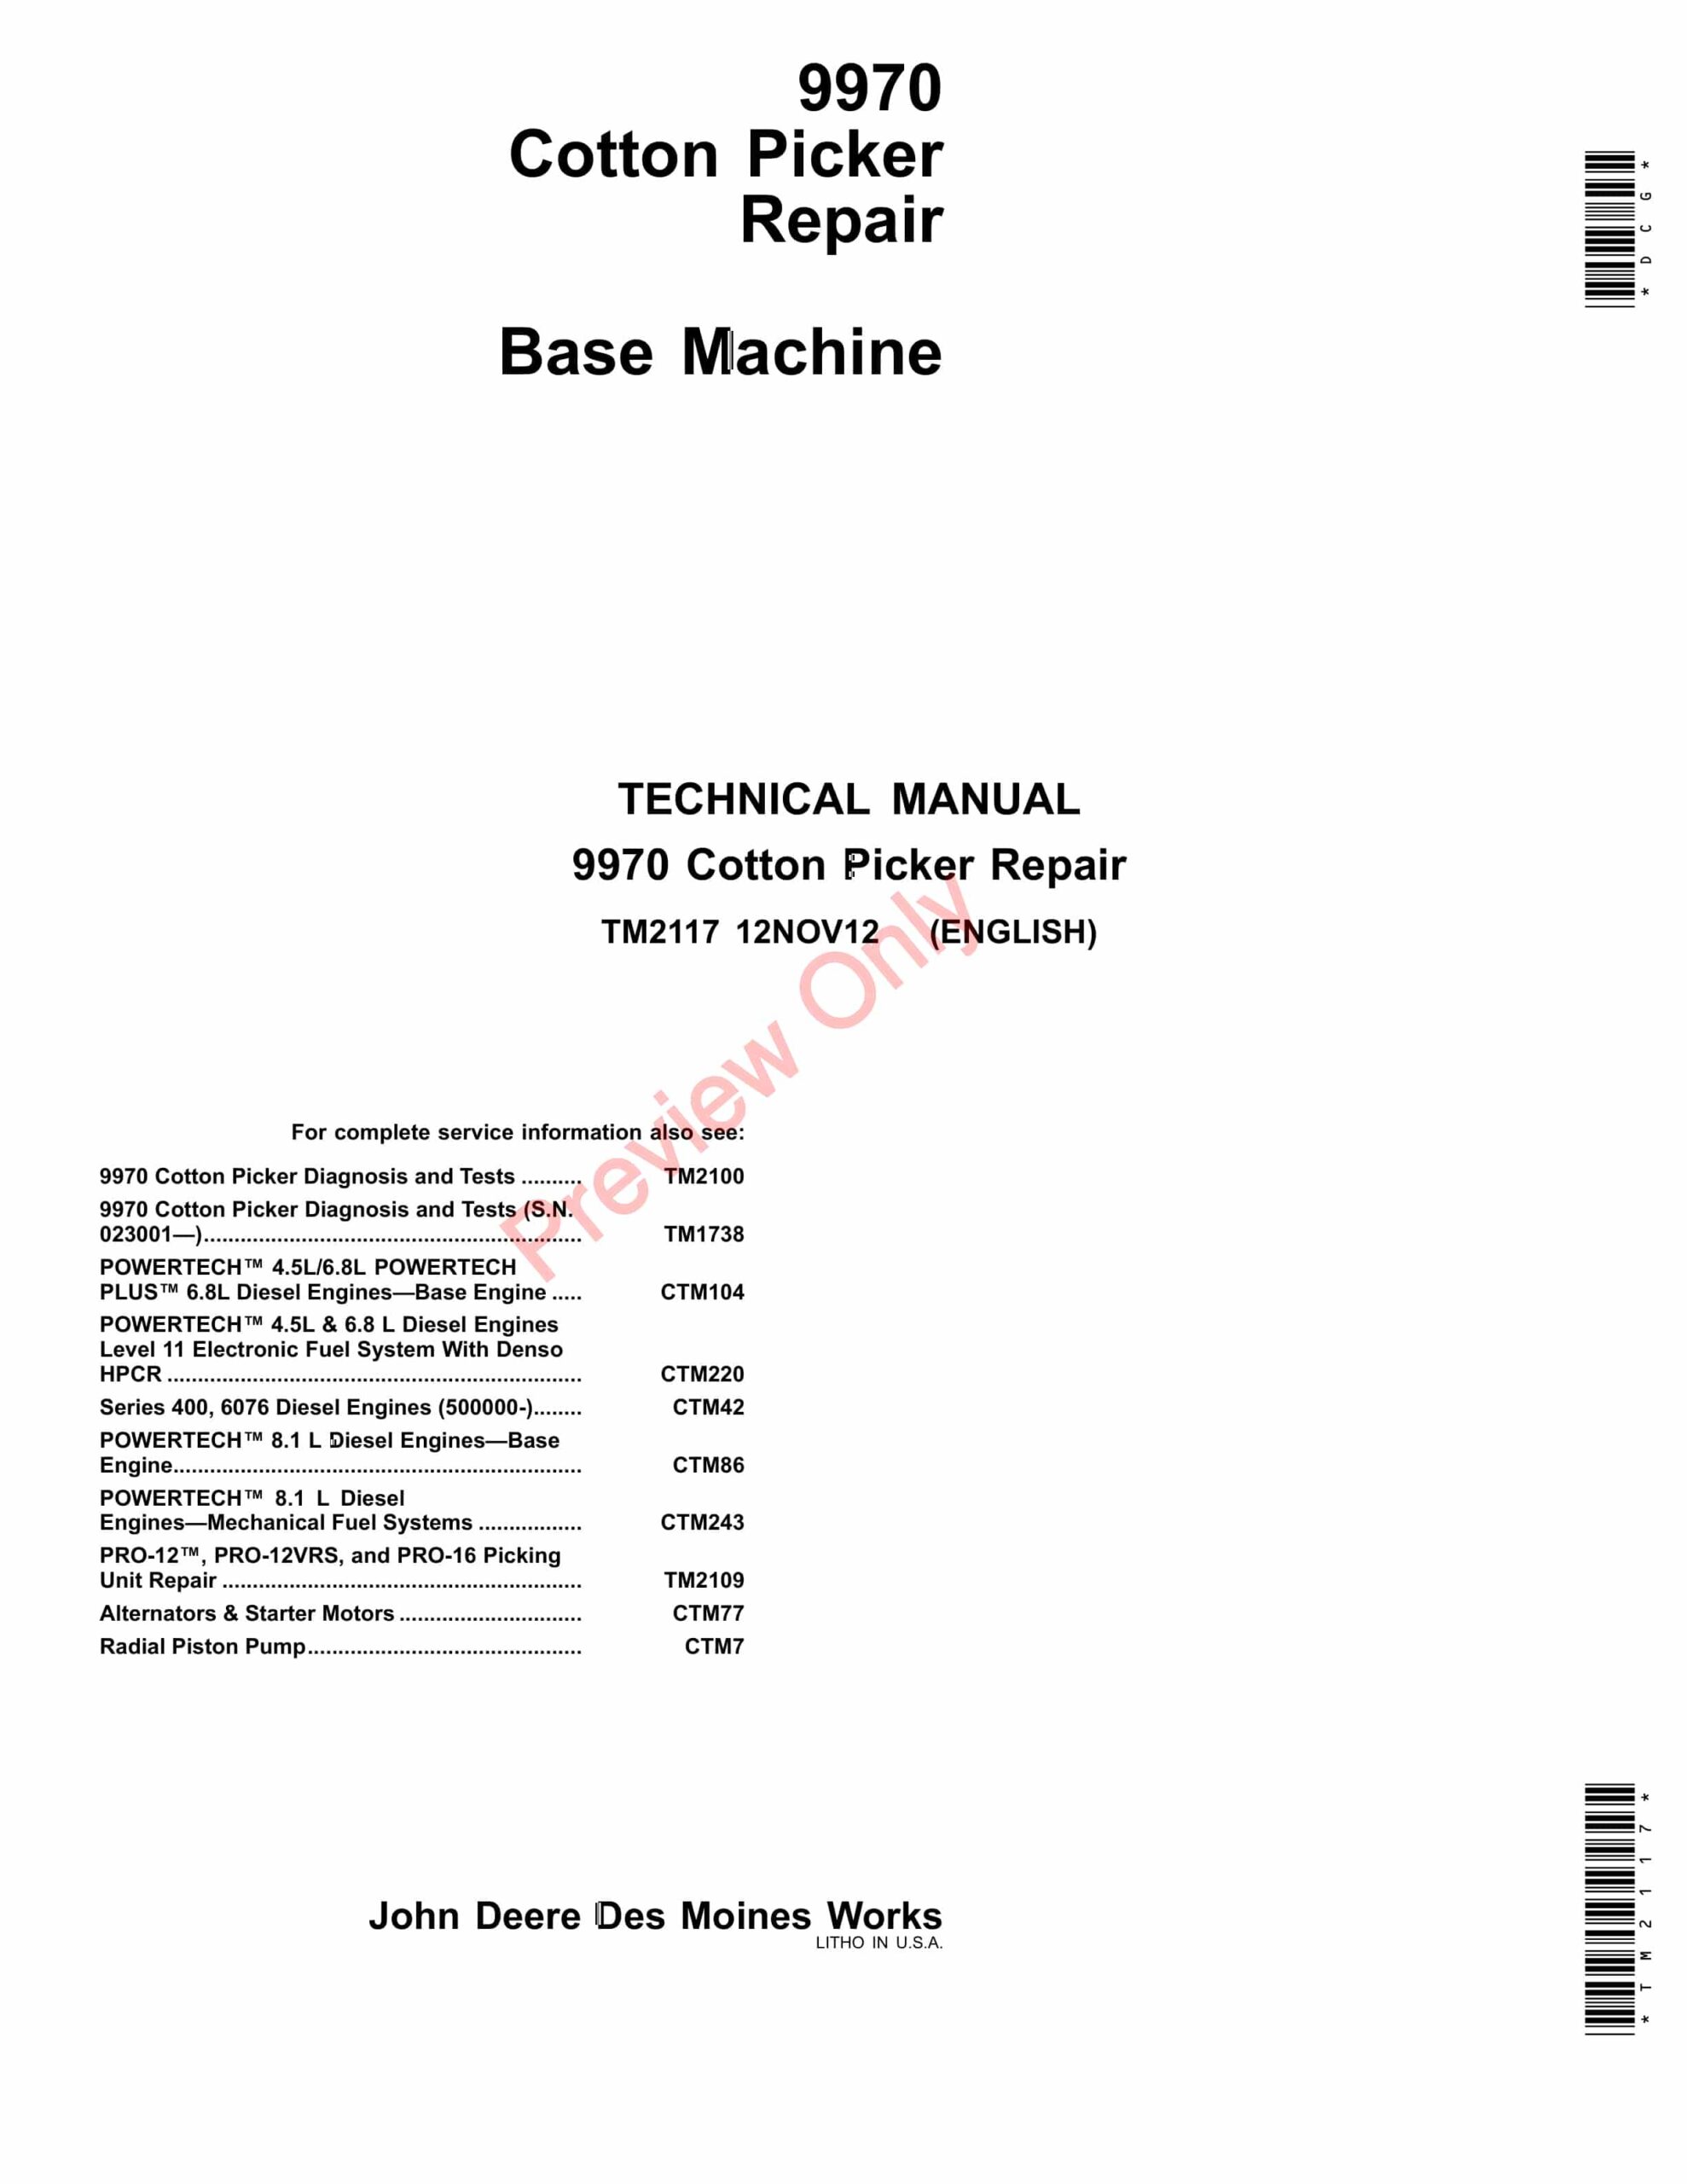 John Deere 9970 Cotton Picker Base Machine Technical Manual TM2117 12NOV12-1